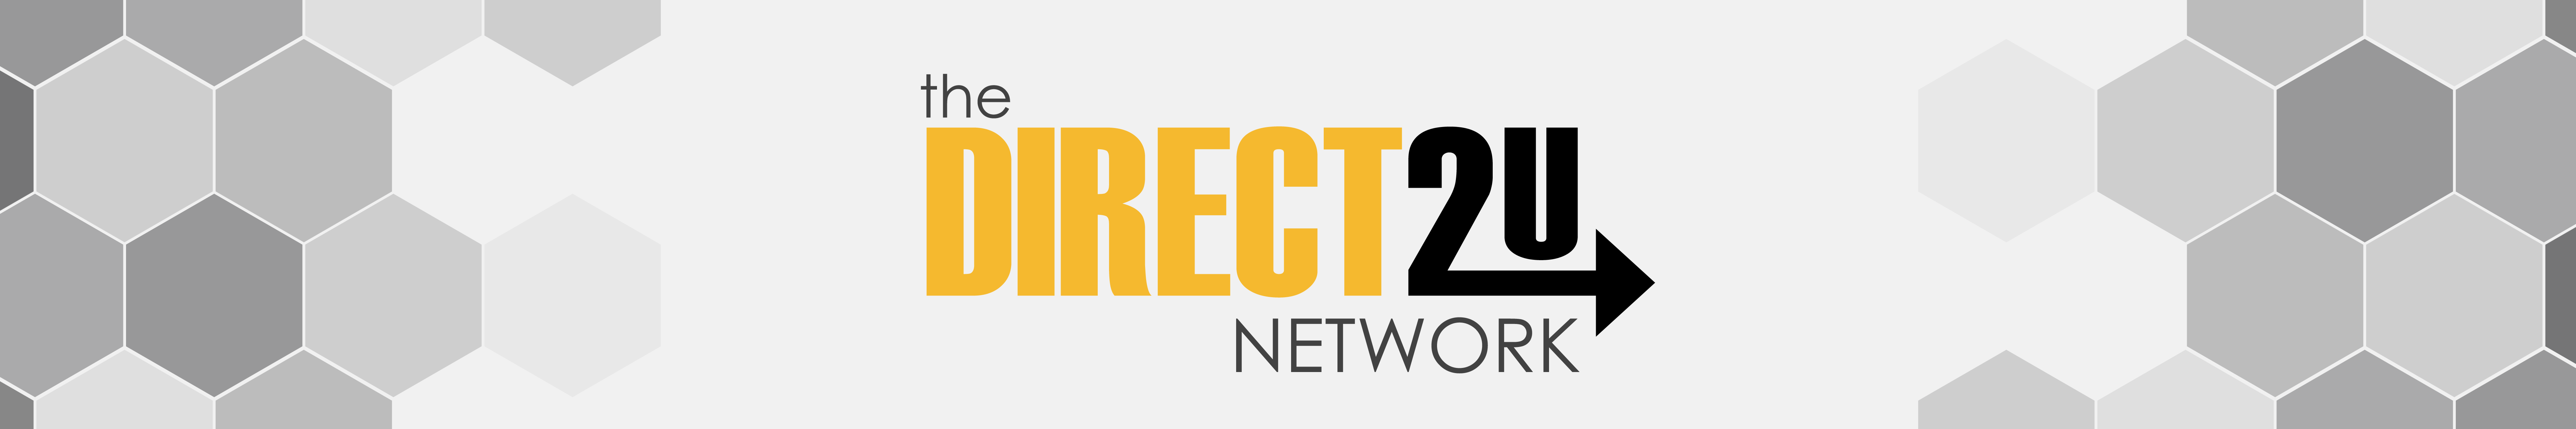 Direct2U Network Blog